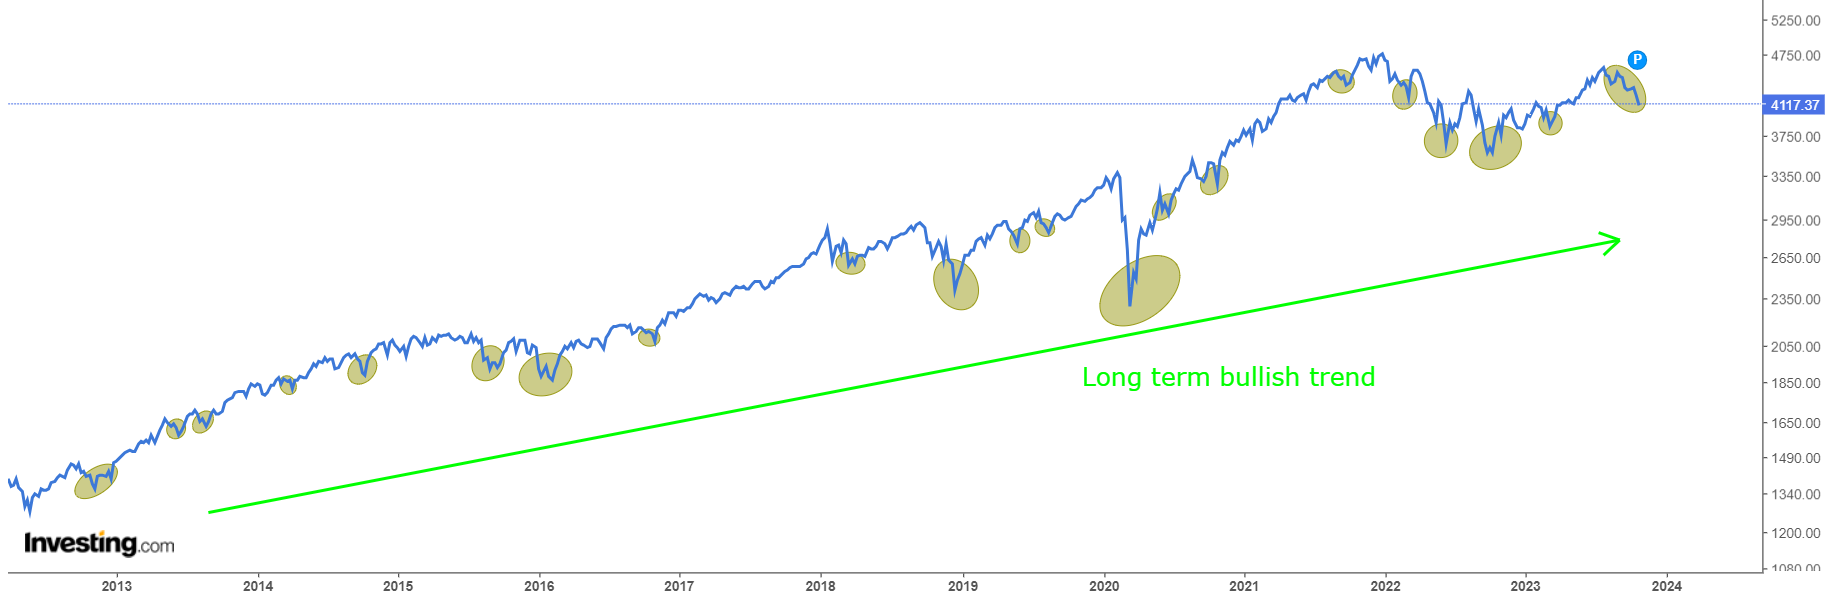 S&P 500's Long Term Bullish Trend